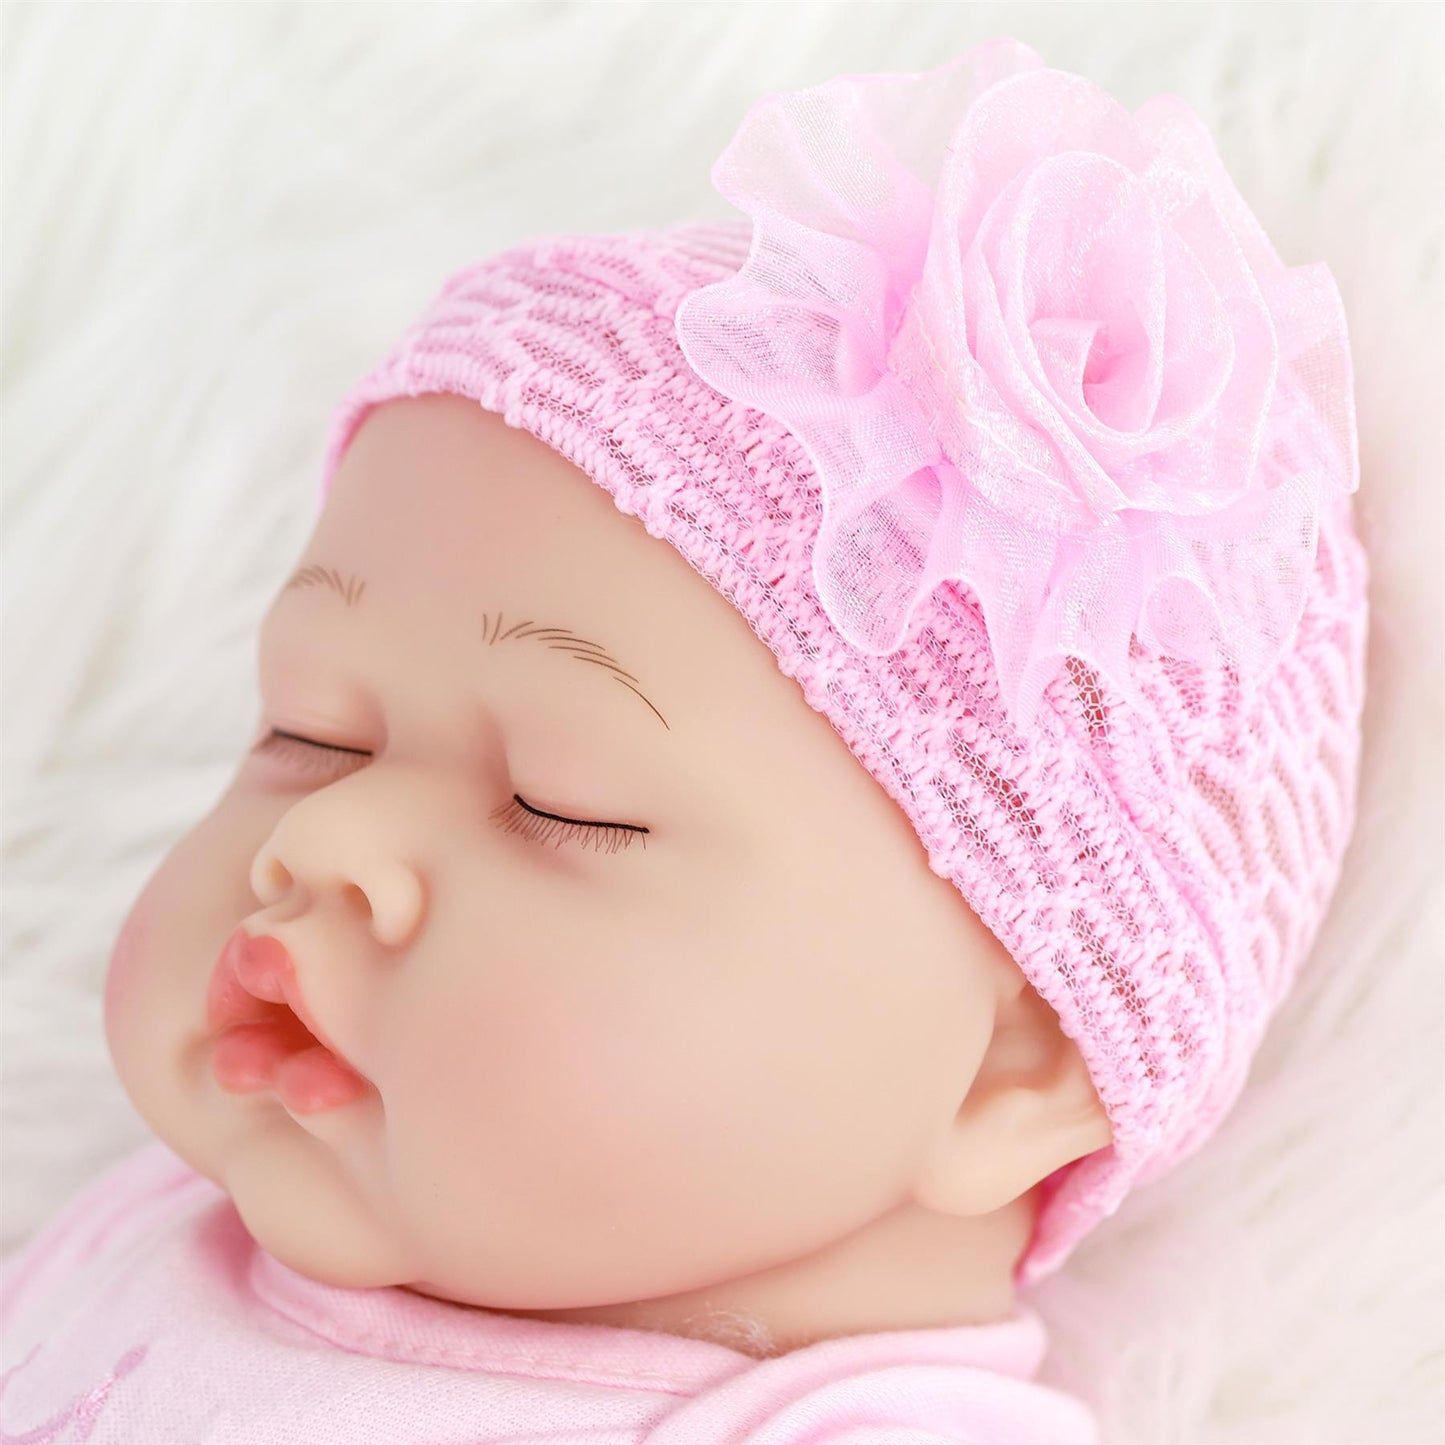 Lifelike Reborn Baby Sleeping Girl Doll 17" by BiBi Doll - UKBuyZone